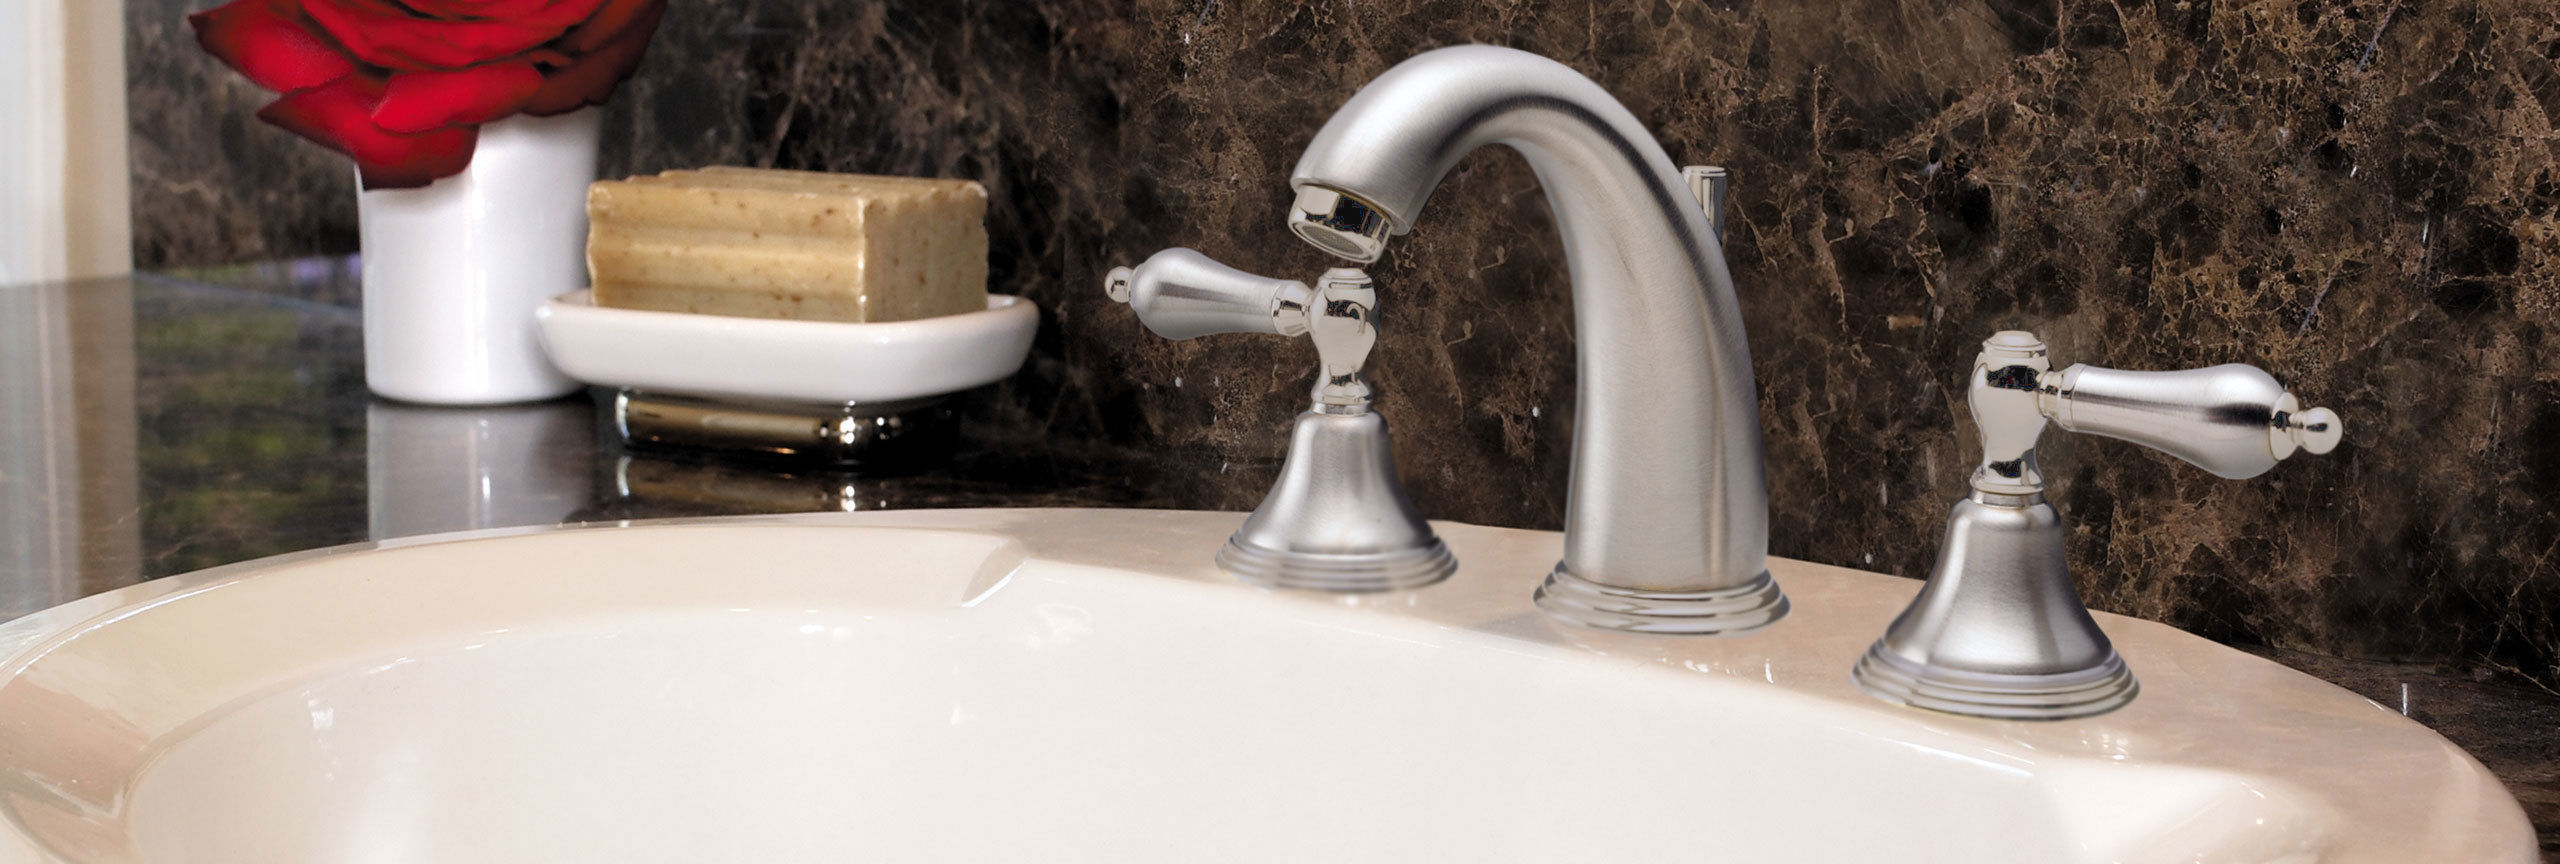 bathroom series coronado widespread faucet on porcelain sink